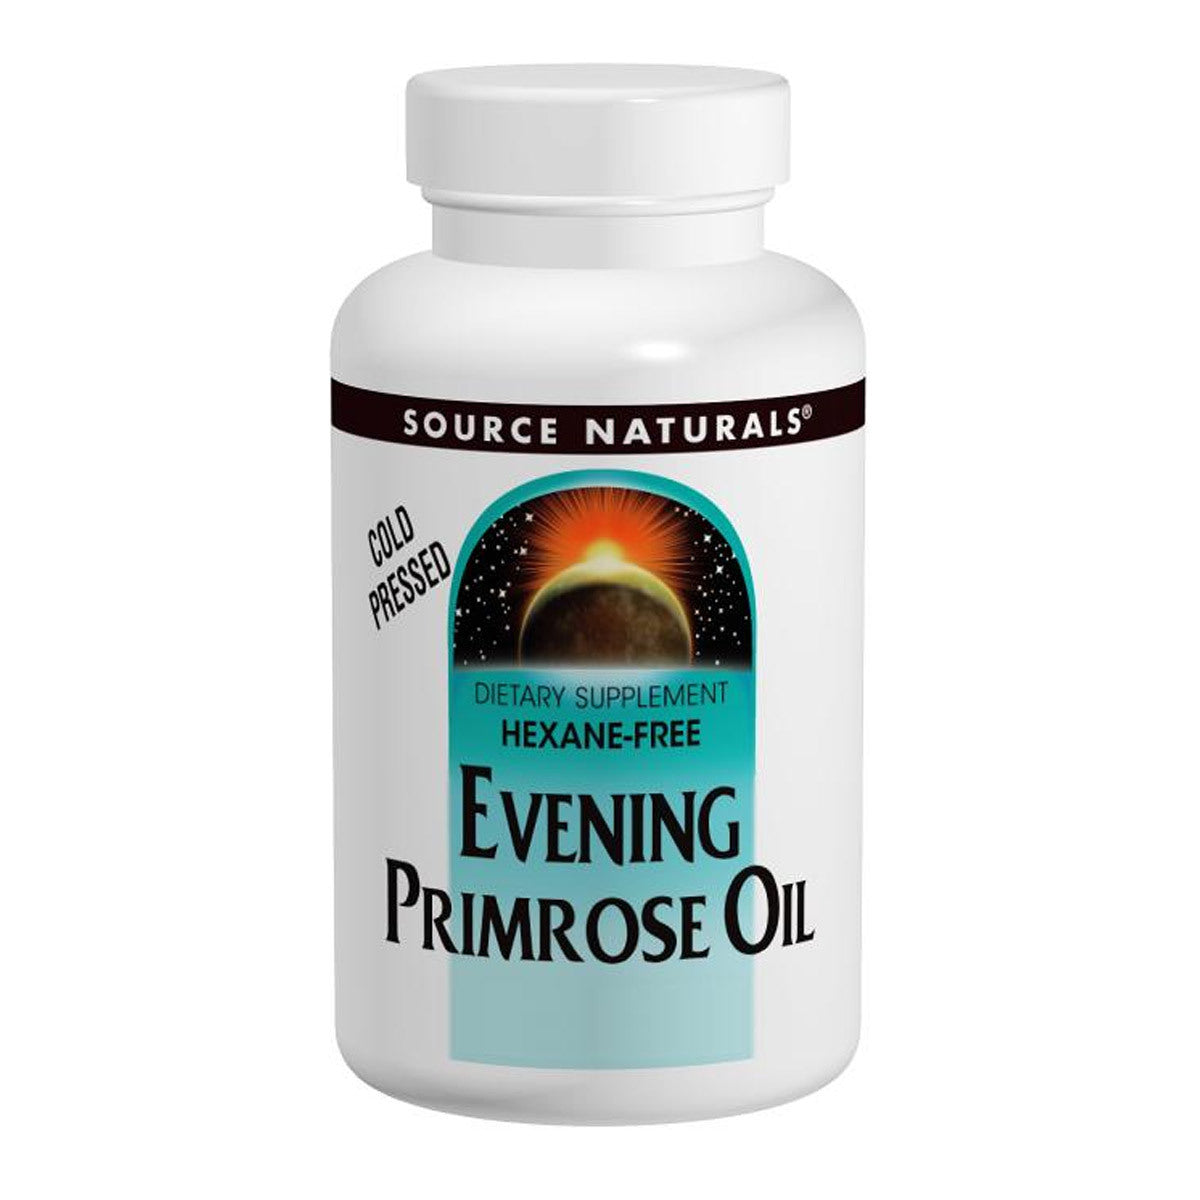 Primary image of Evening Primrose Oil 1350mg